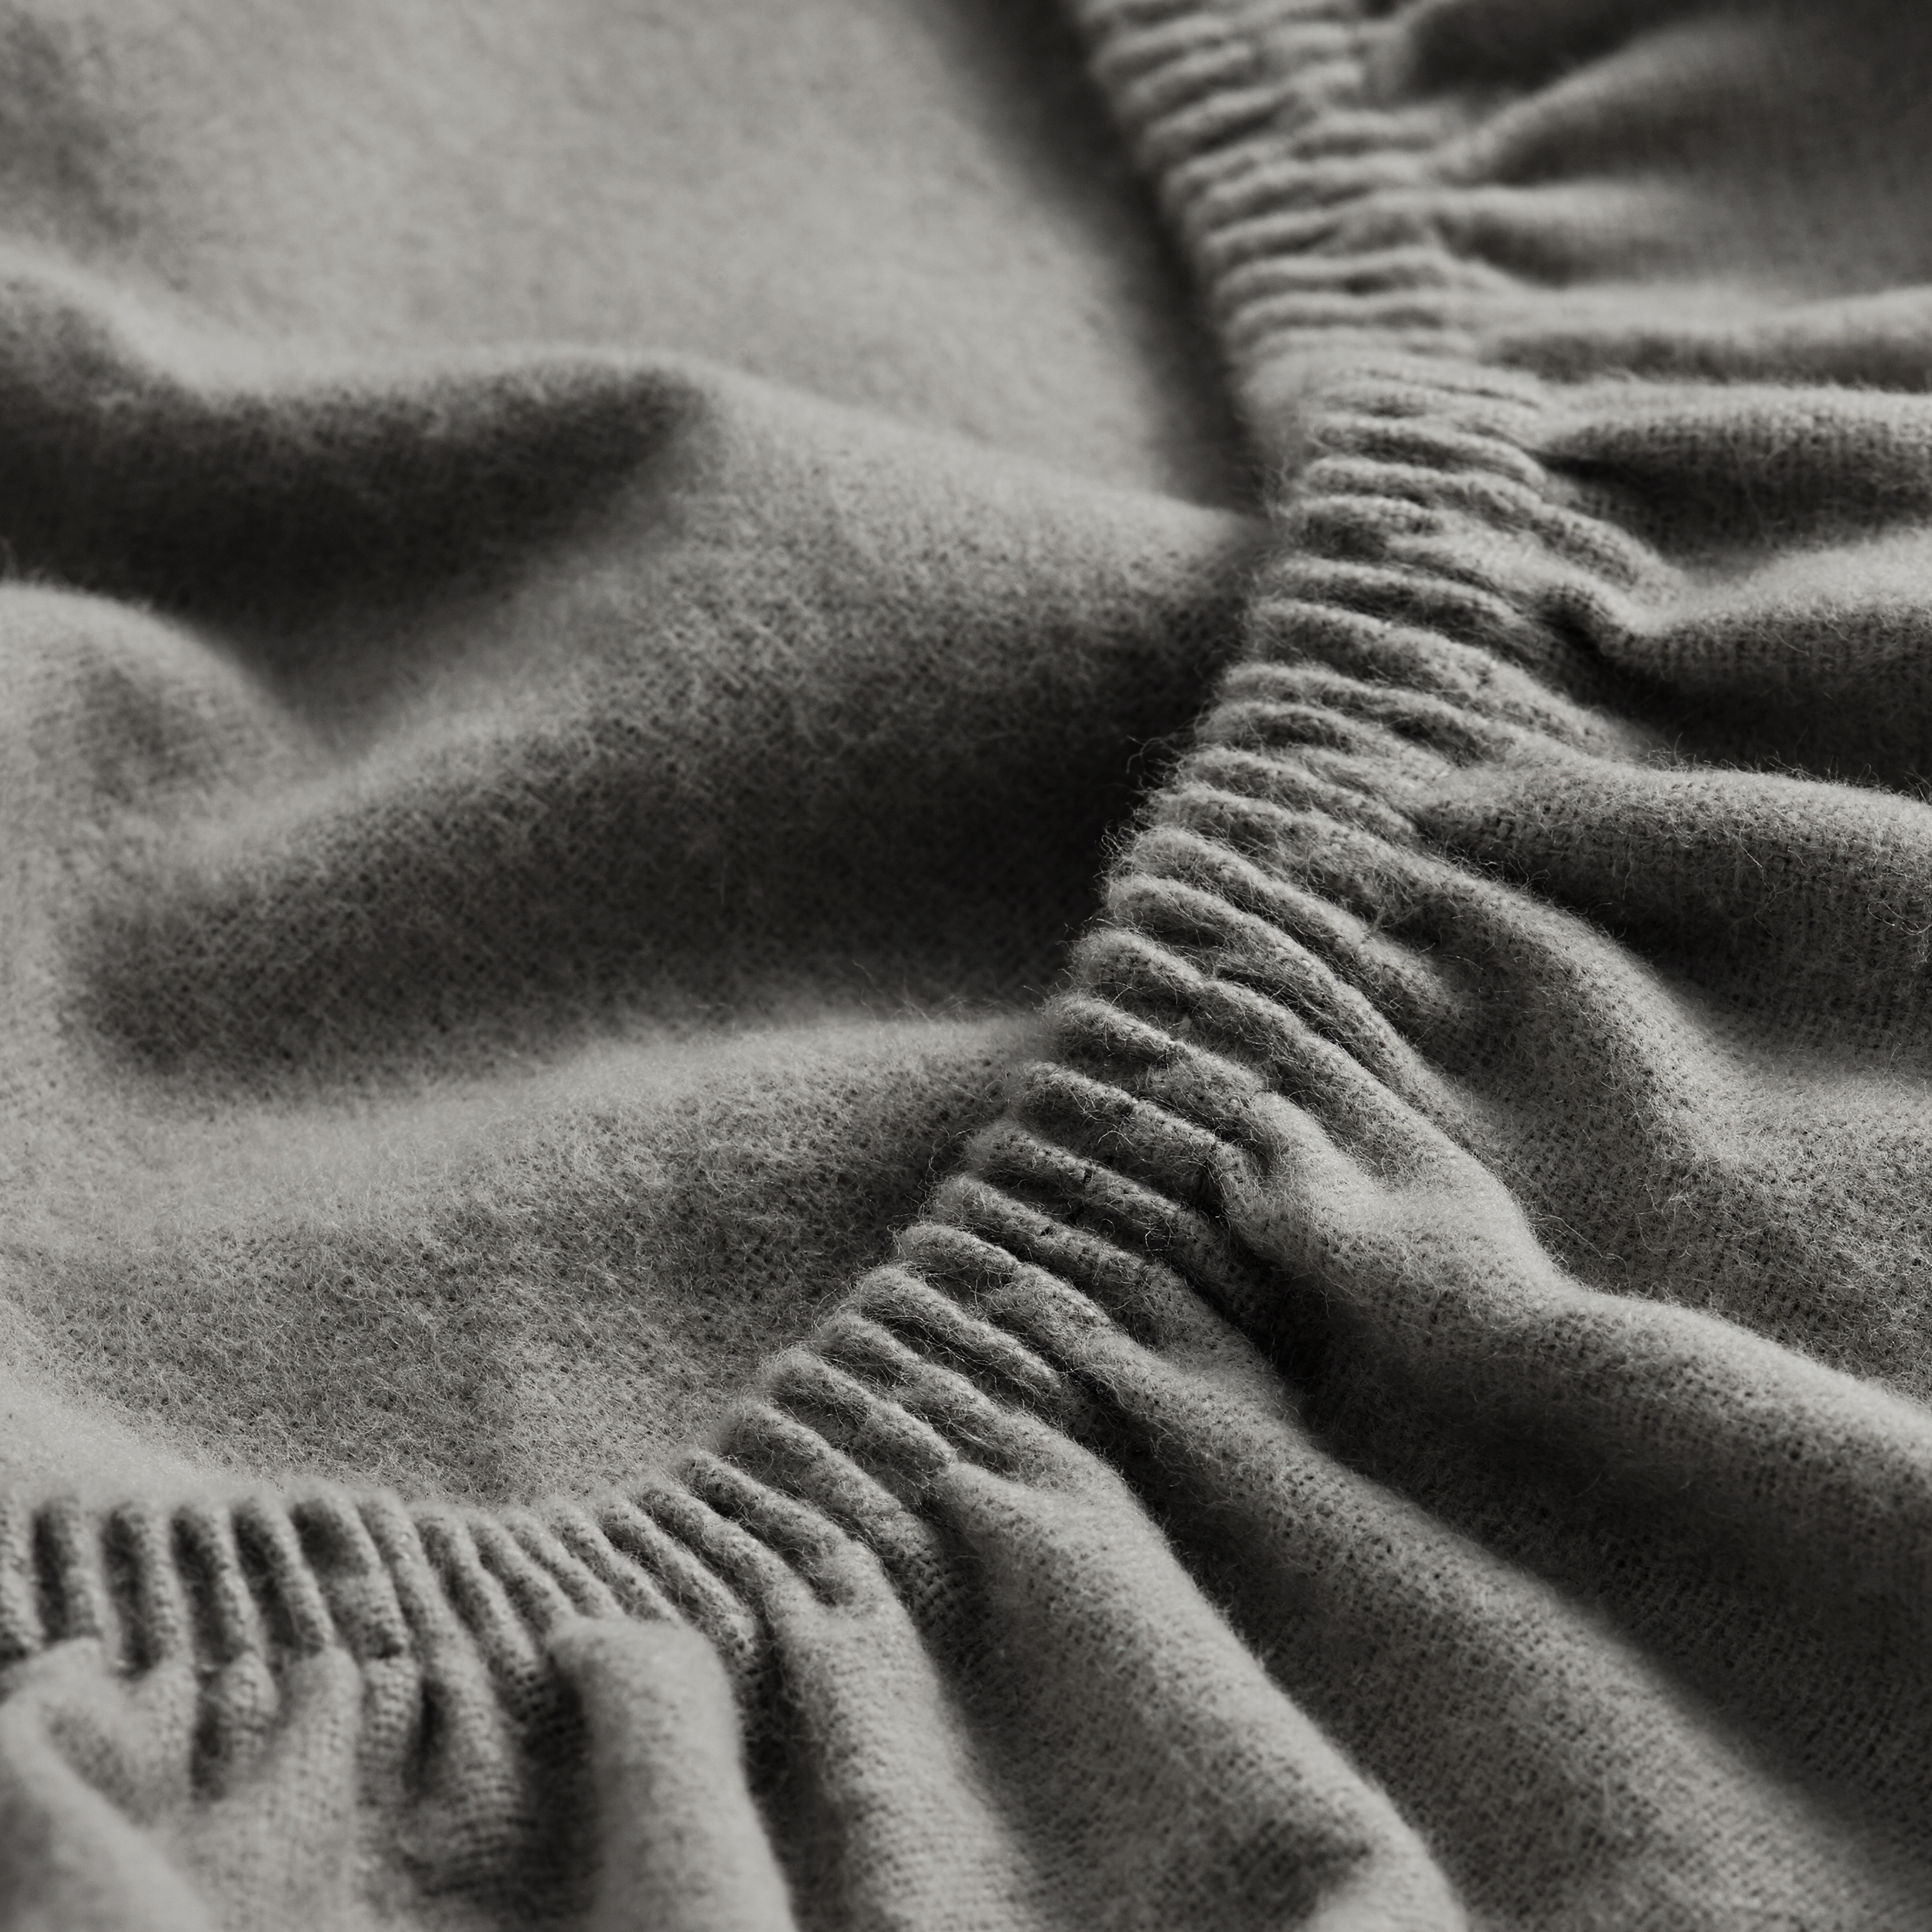 Bare Home 100% Cotton Flannel Sheet Set, Heavyweight, Deep Pocket (Queen, Gray) - image 5 of 5